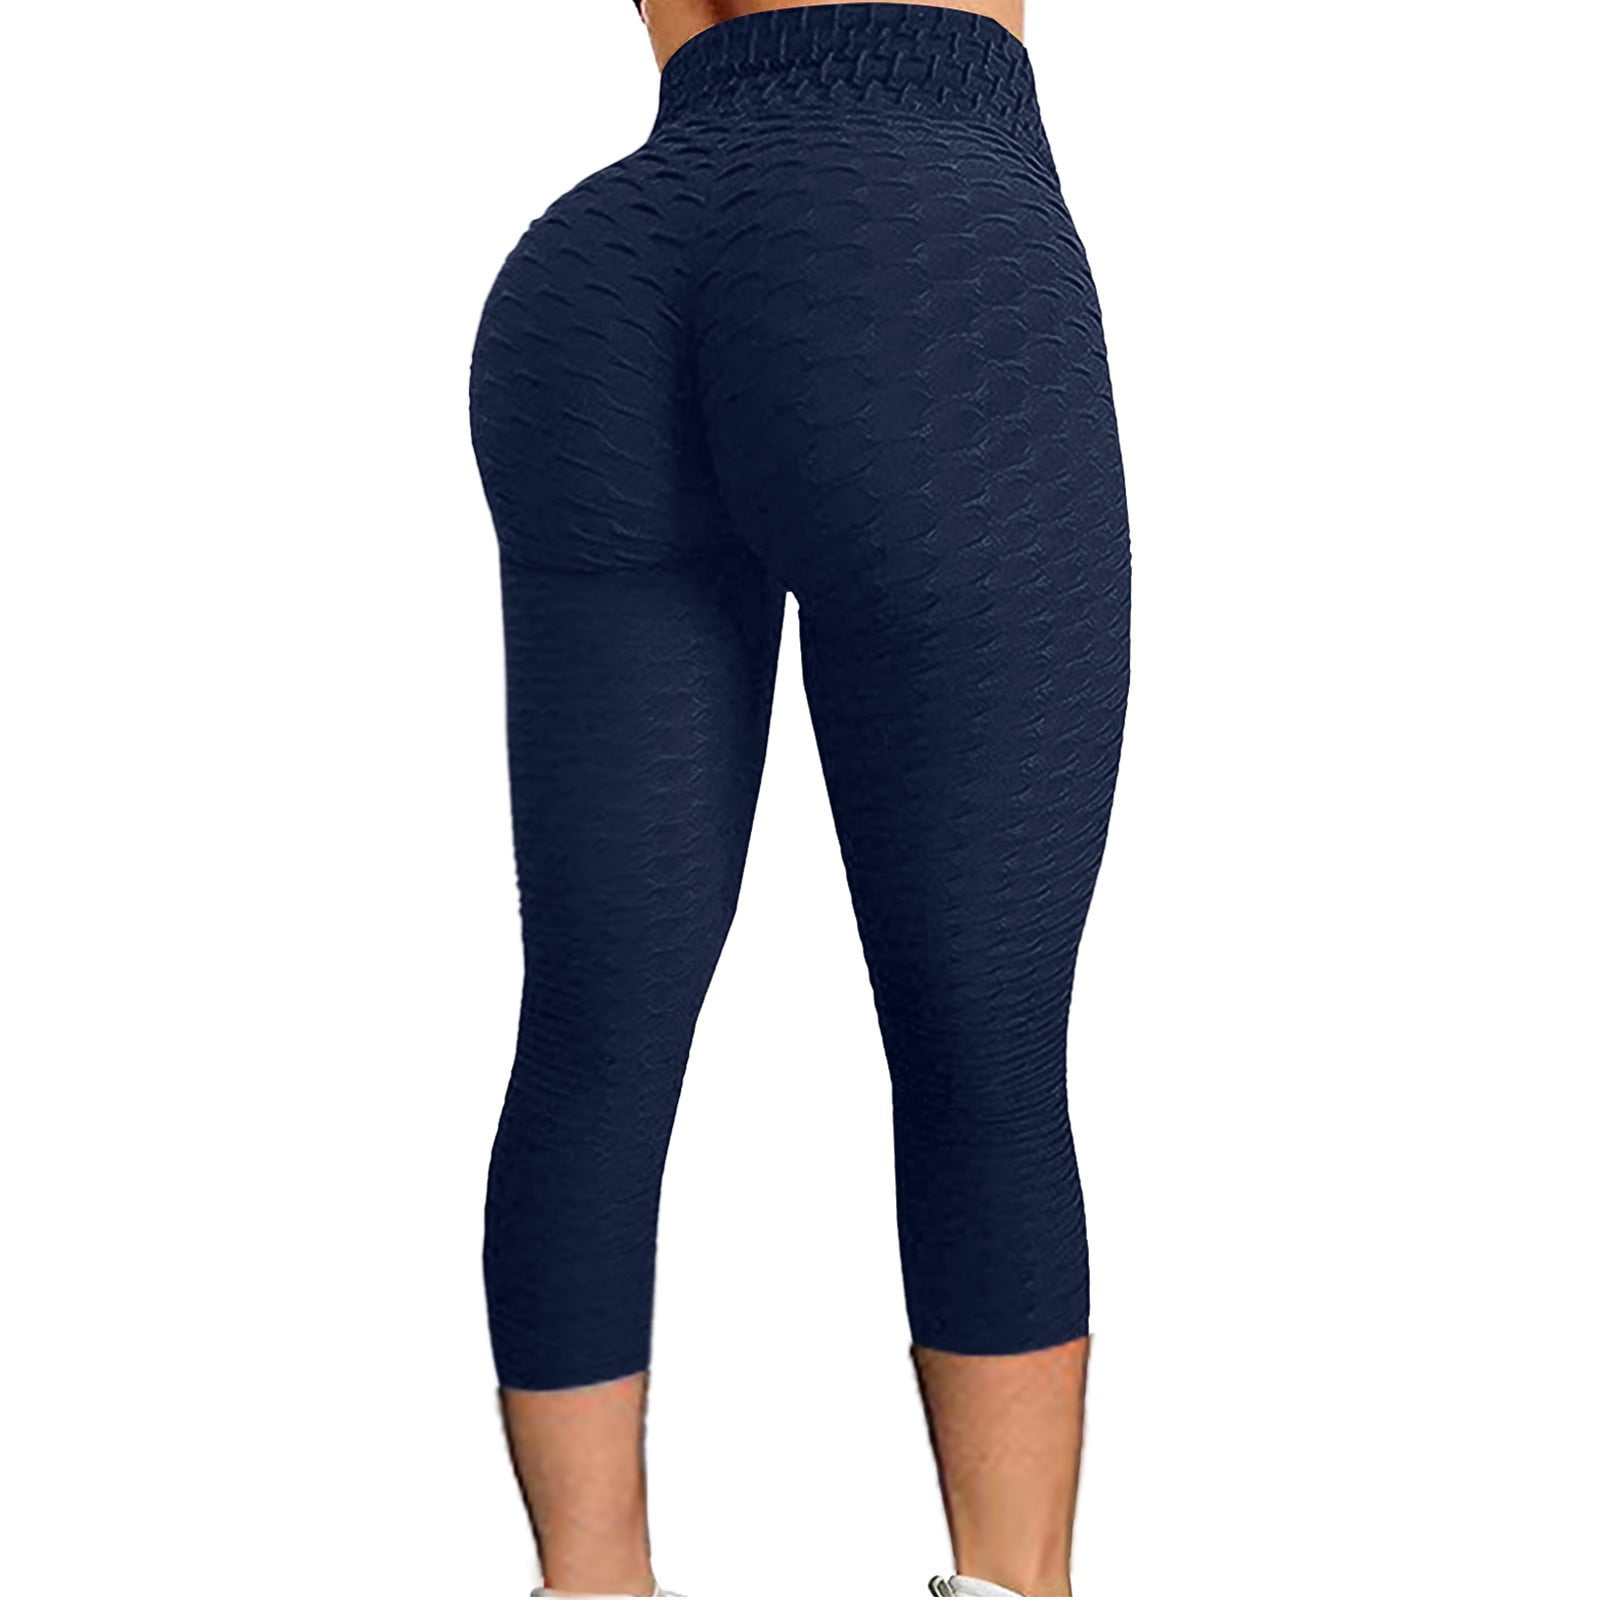 Cathalem Yoga Pants for Women Petite Length Exercise Yoga Waist Bubble  Running Yoga Pants for Women Tall Length Mesh Lift Pants Blue X-Large 